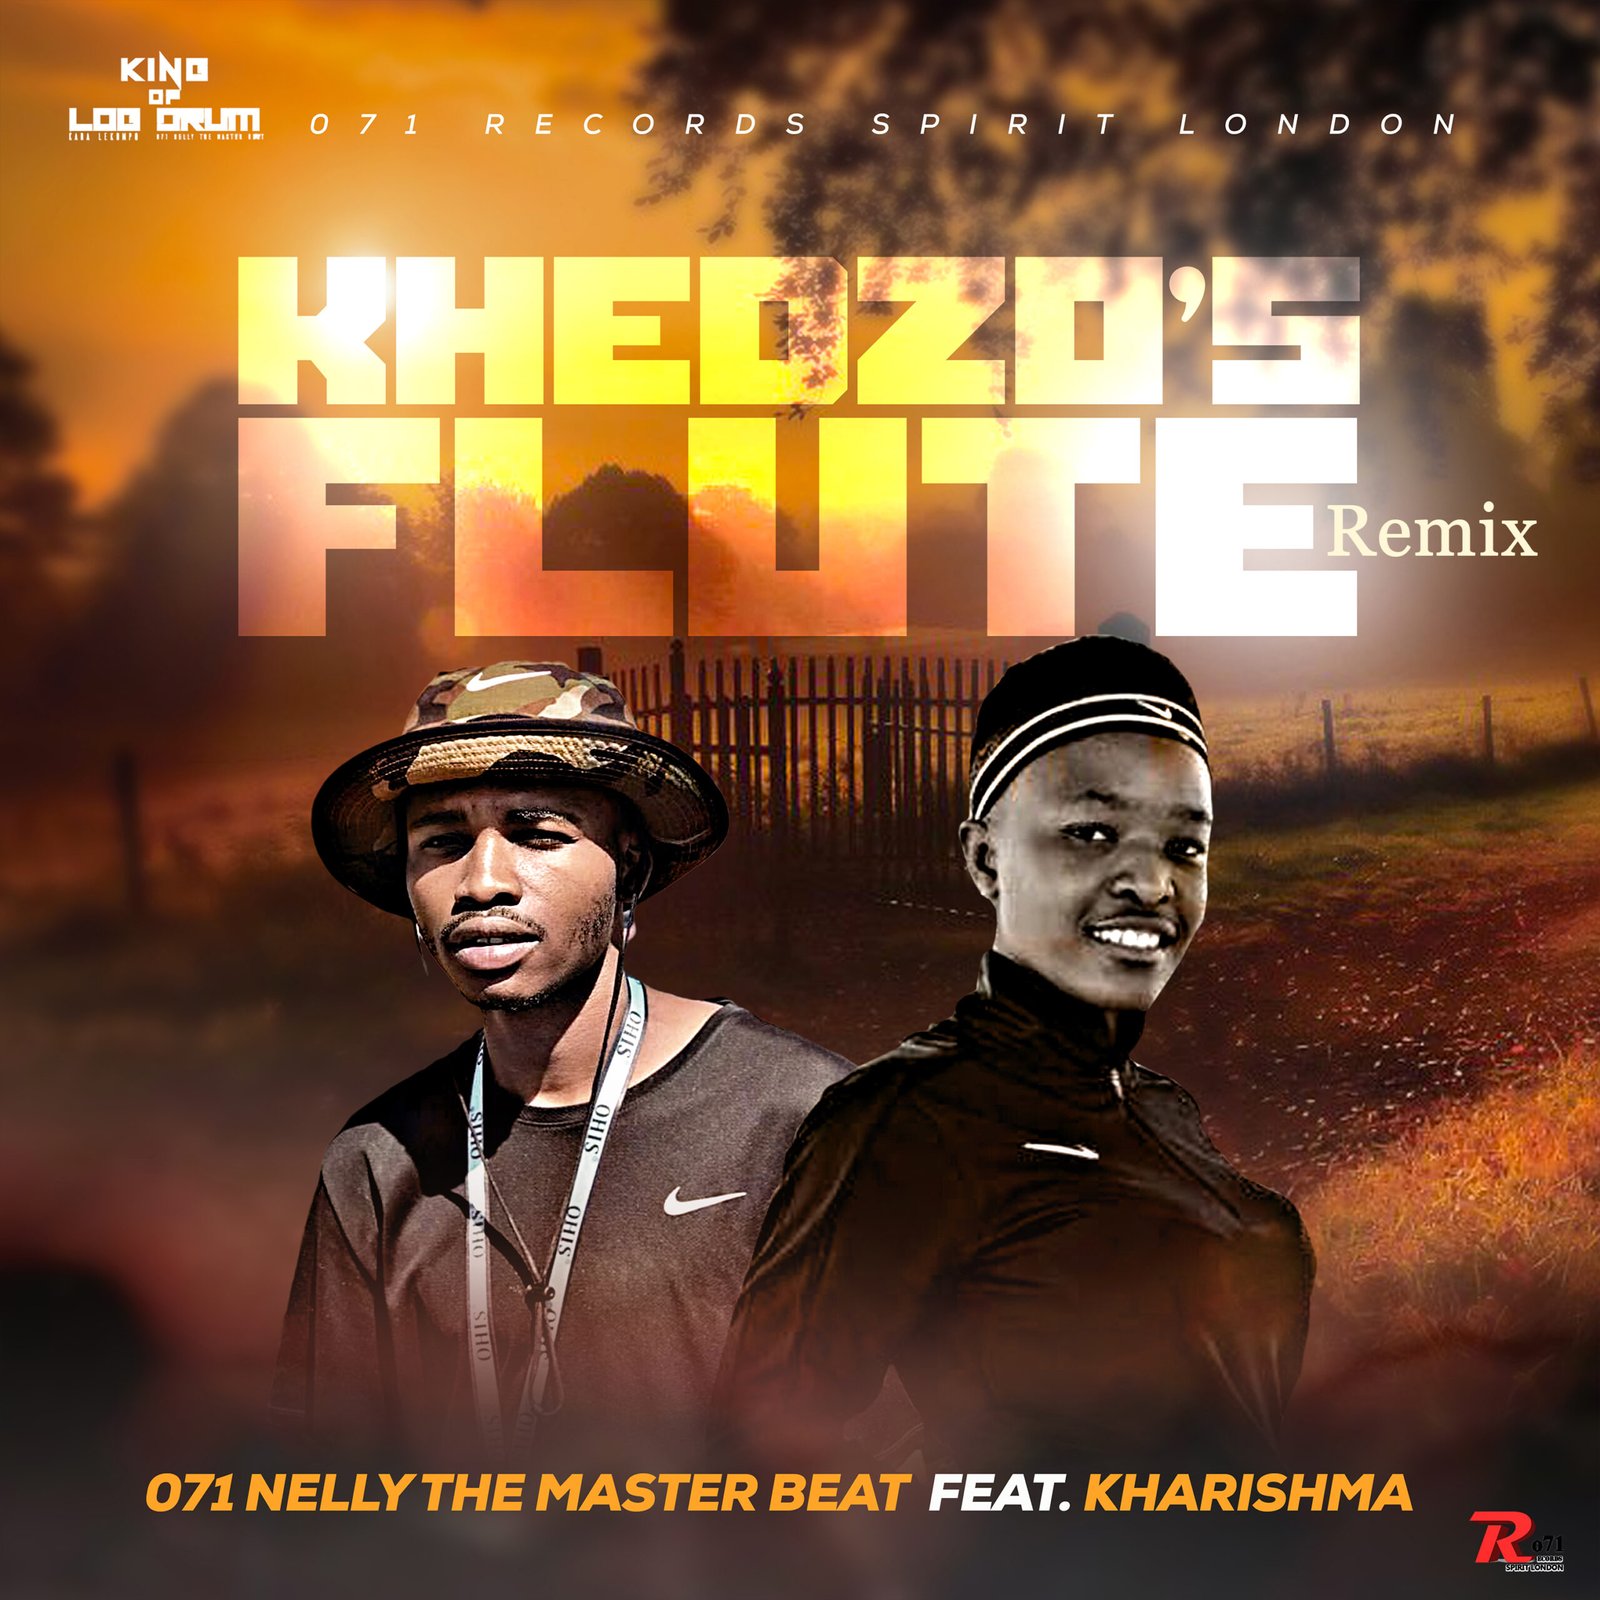 Khedzo Flute Remix - 071 Nelly The Master Beat Feat Kharishma@Bolomp3.com